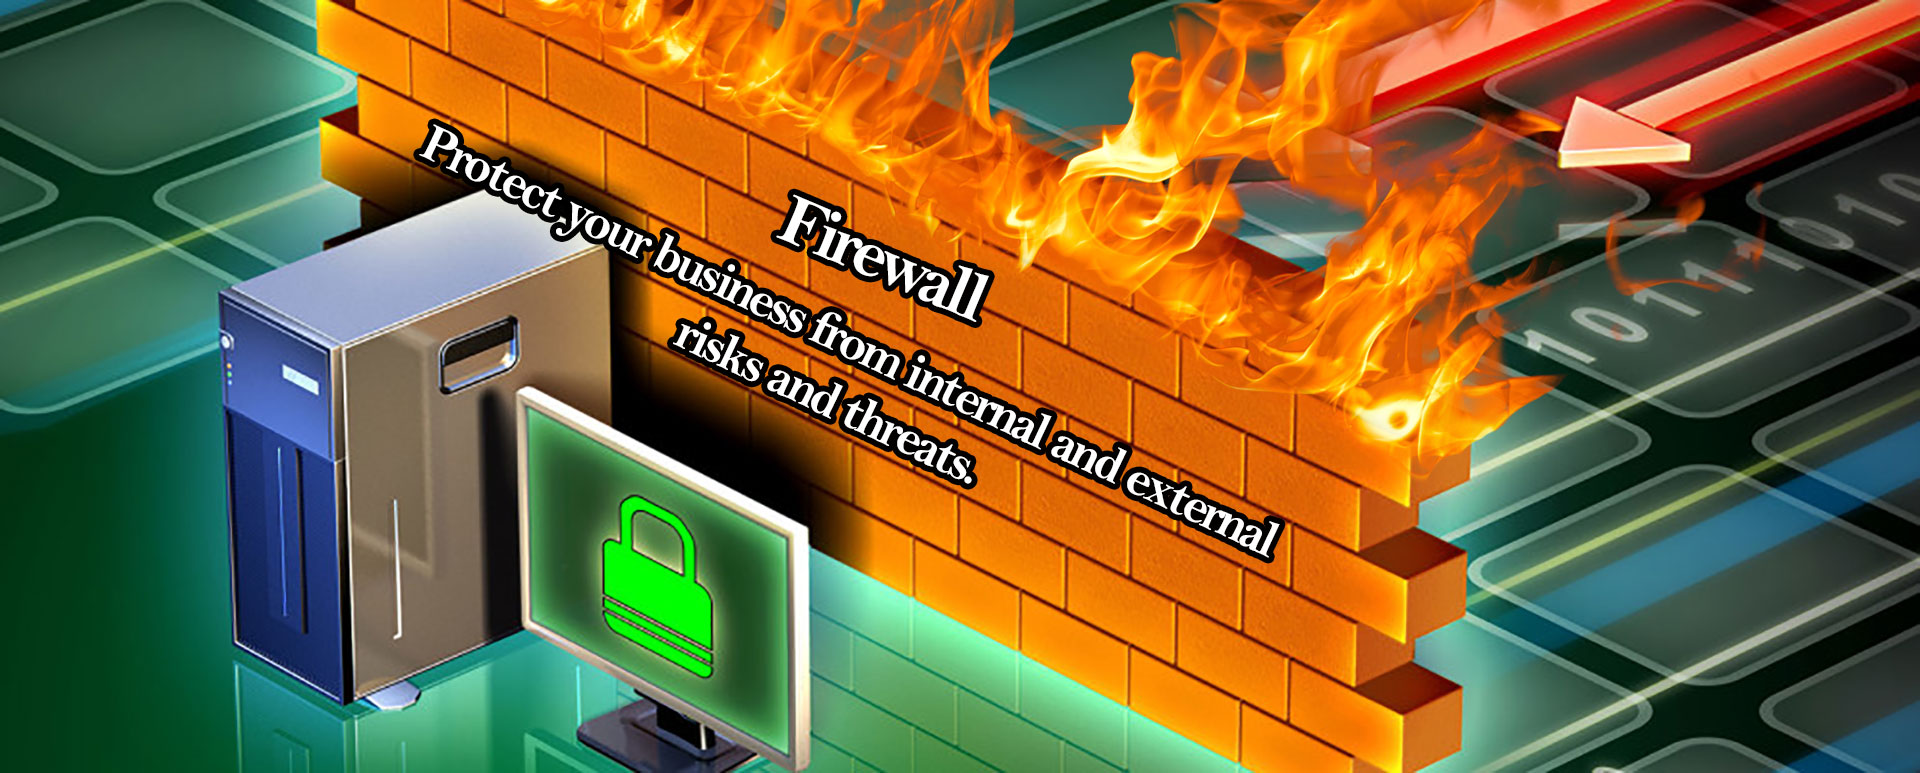 Firewall service